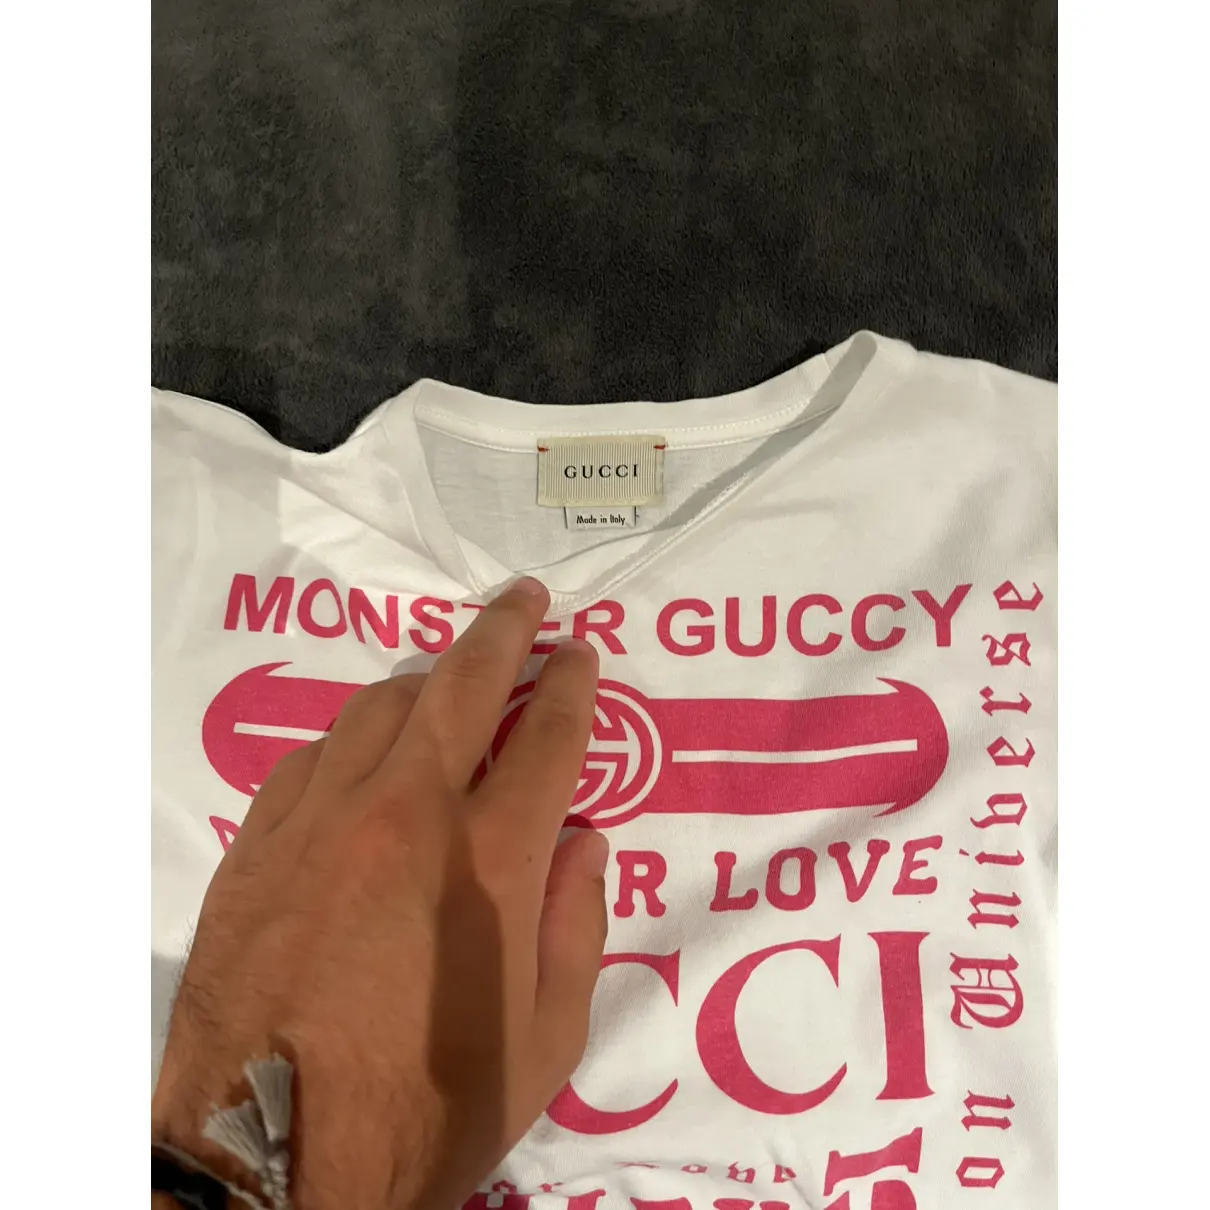 Buy Gucci T-shirt online